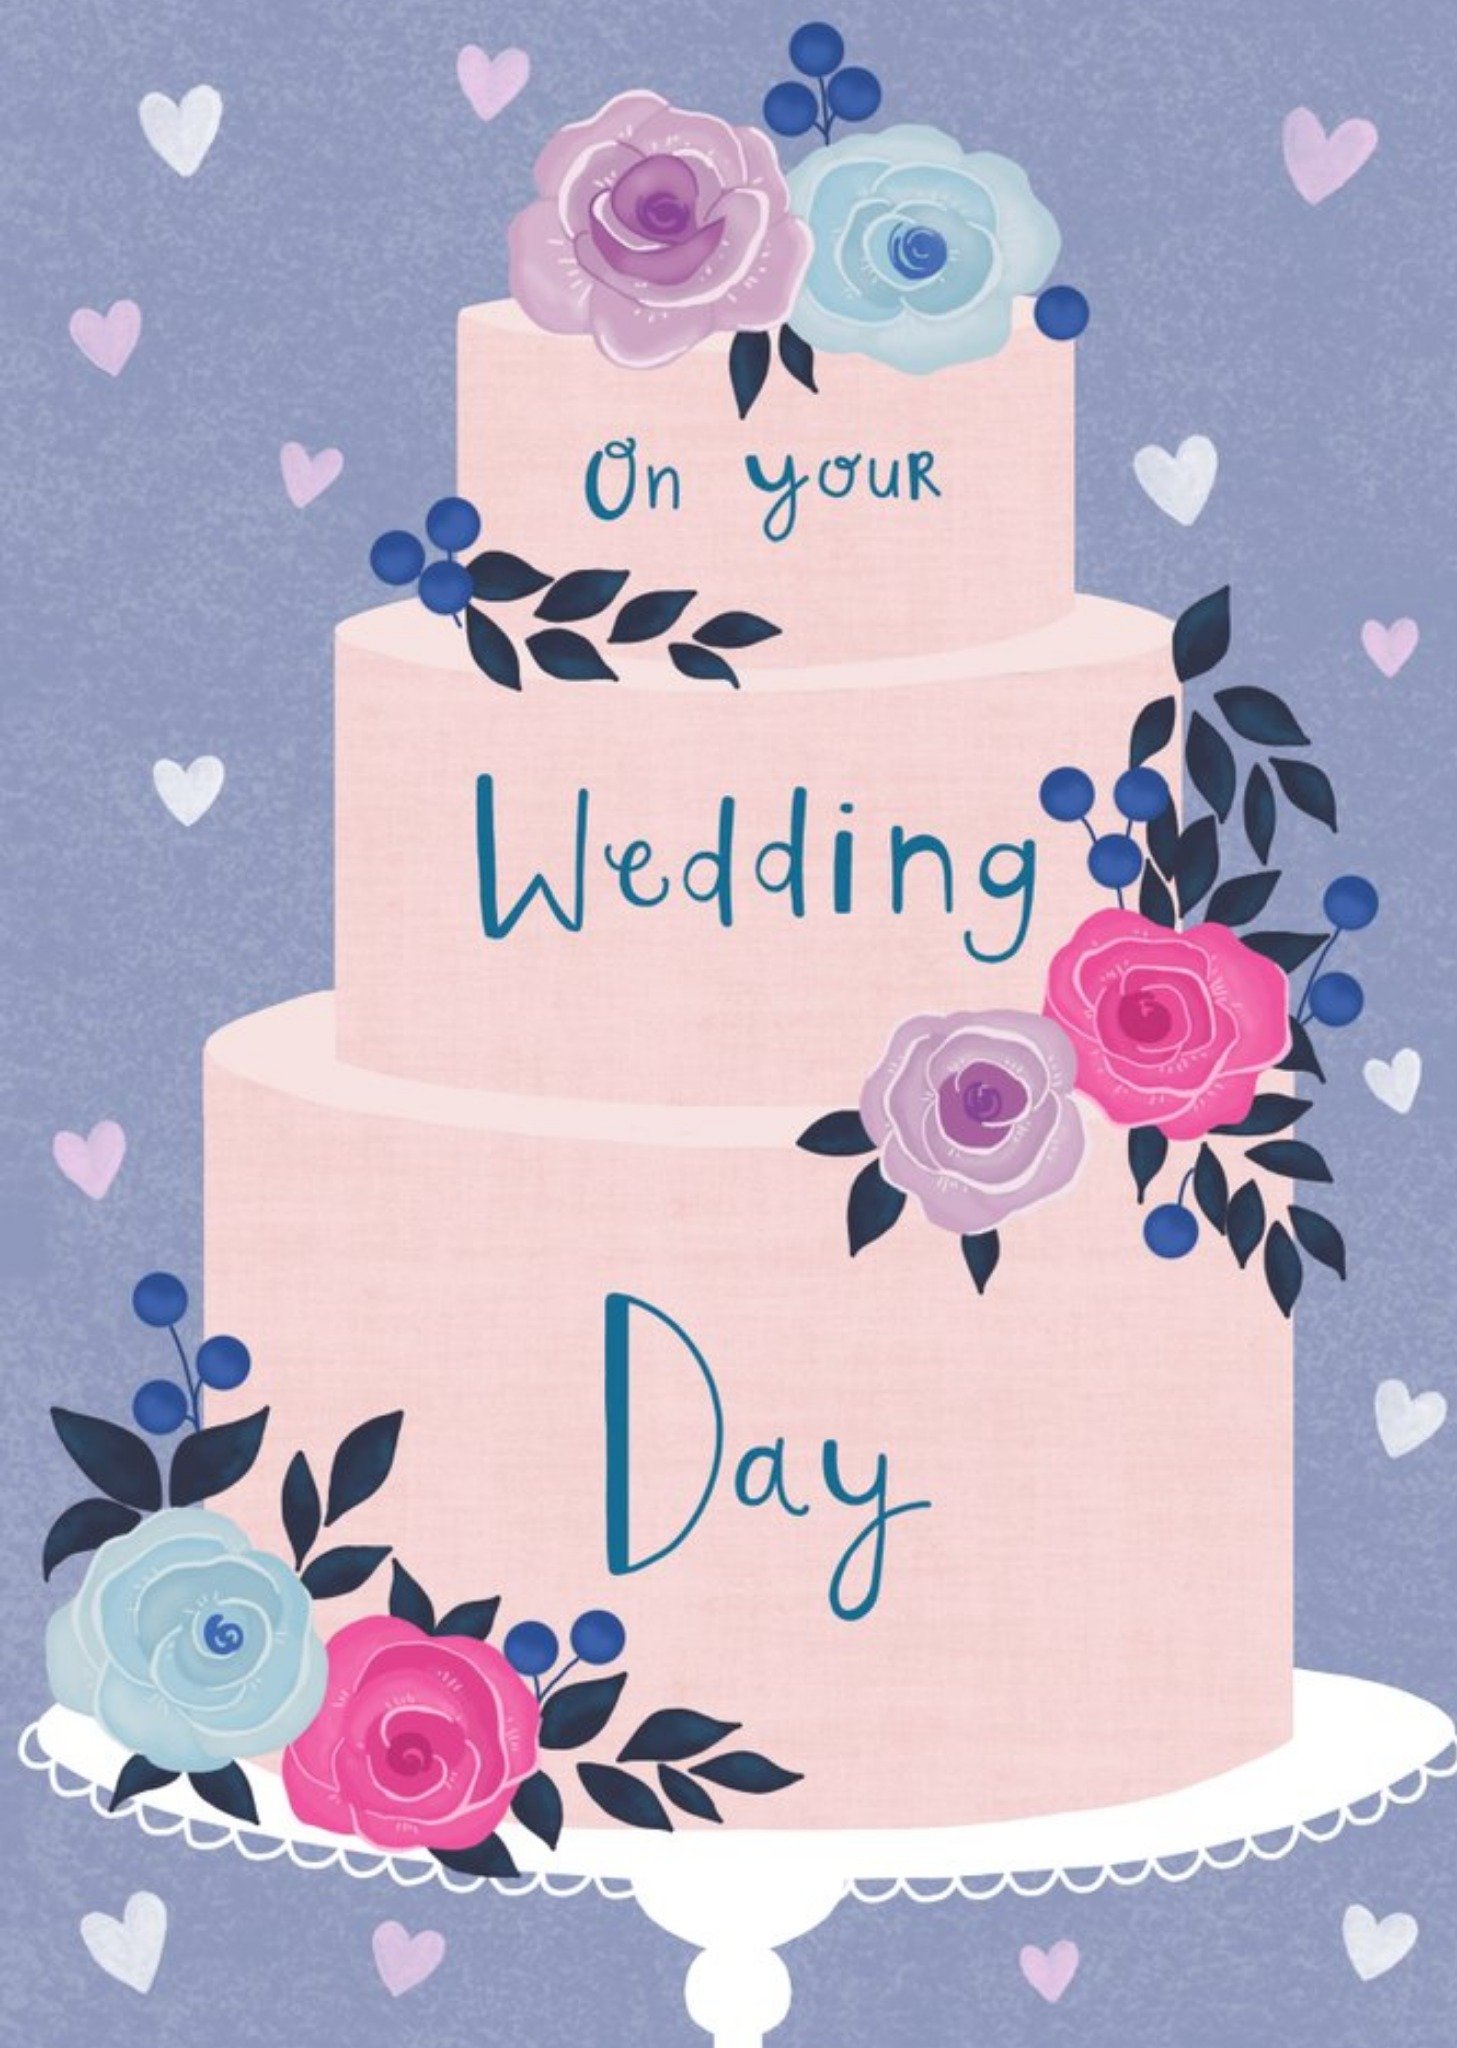 Moonpig Illustration Of A Wedding Cake Wedding Day Card Ecard